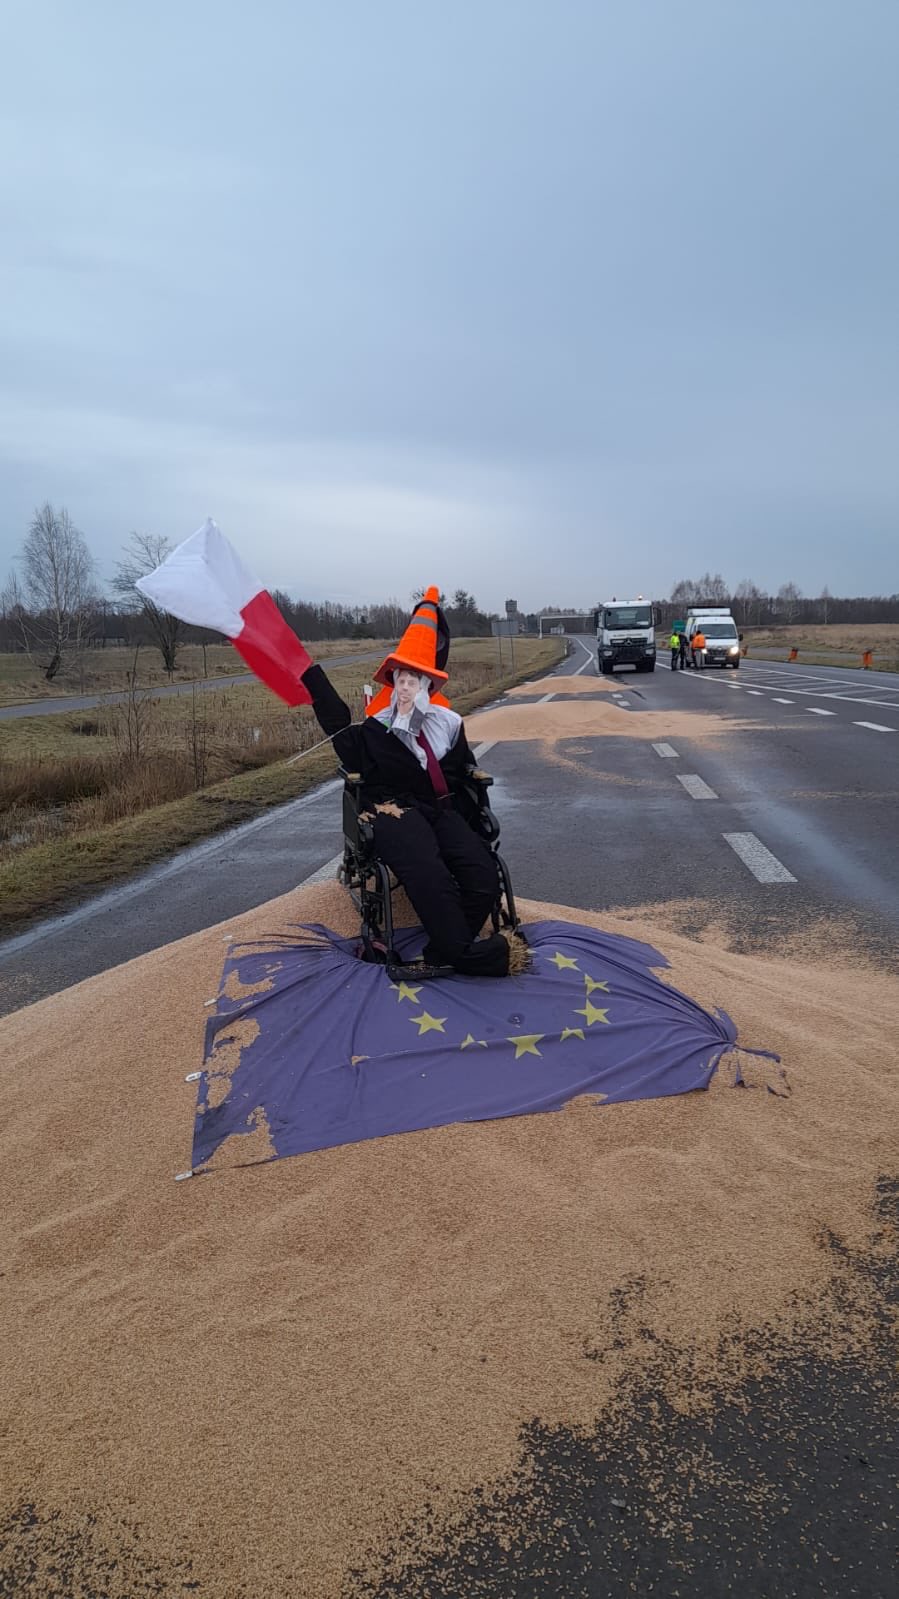 Poles dump grain from Ukrainian trucks near border amid new protests: reactions